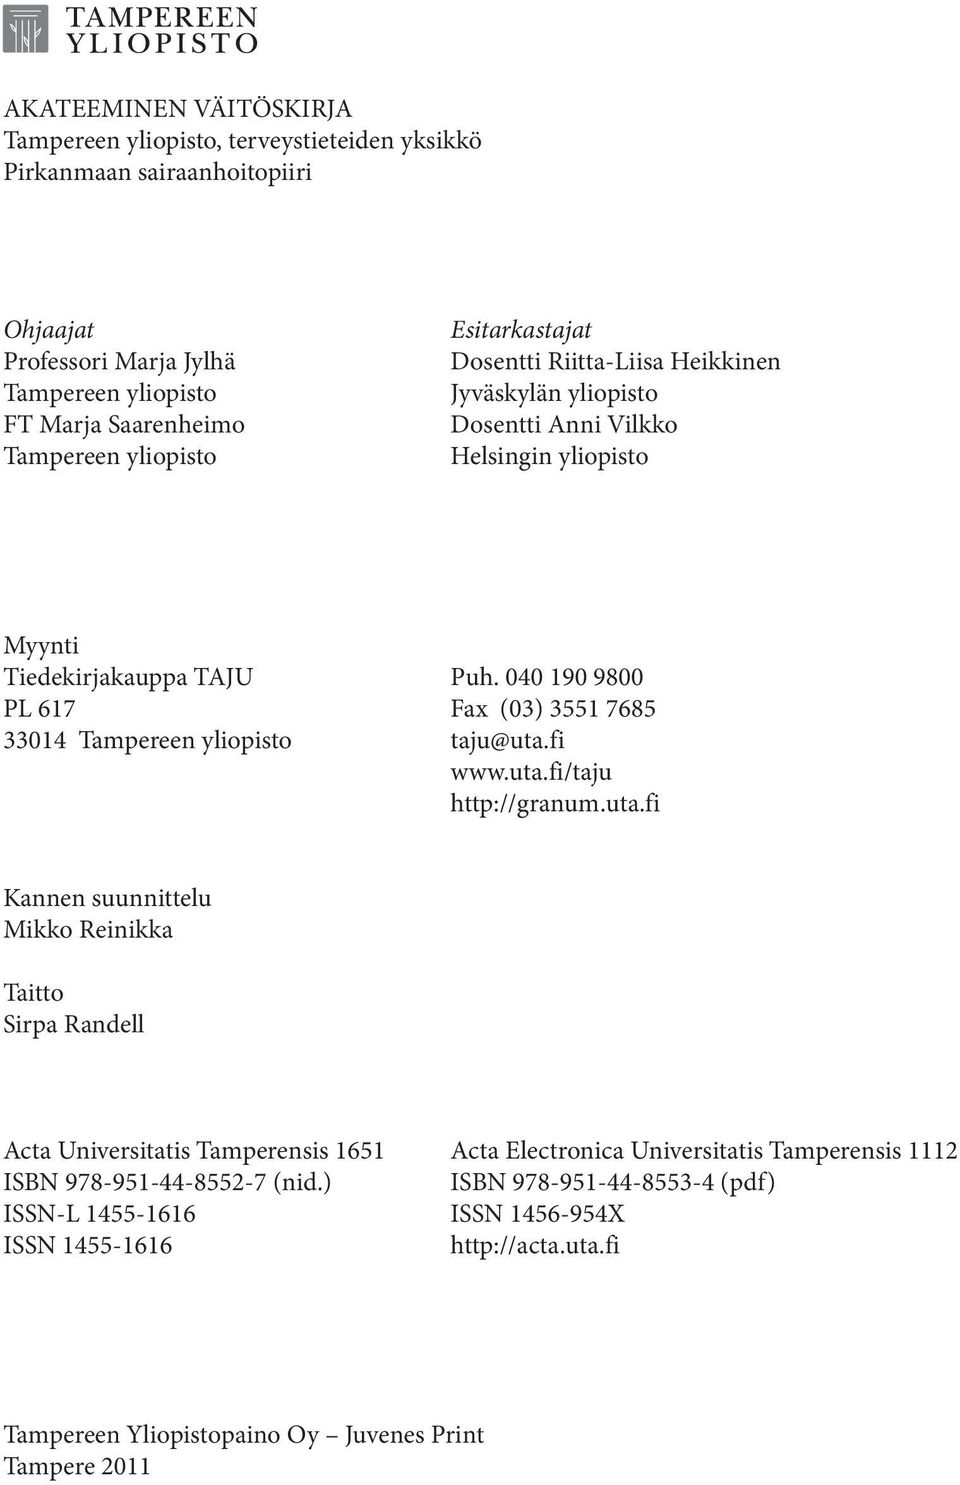 040 190 9800 PL 617 Fax (03) 3551 7685 33014 Tampereen yliopisto taju@uta.